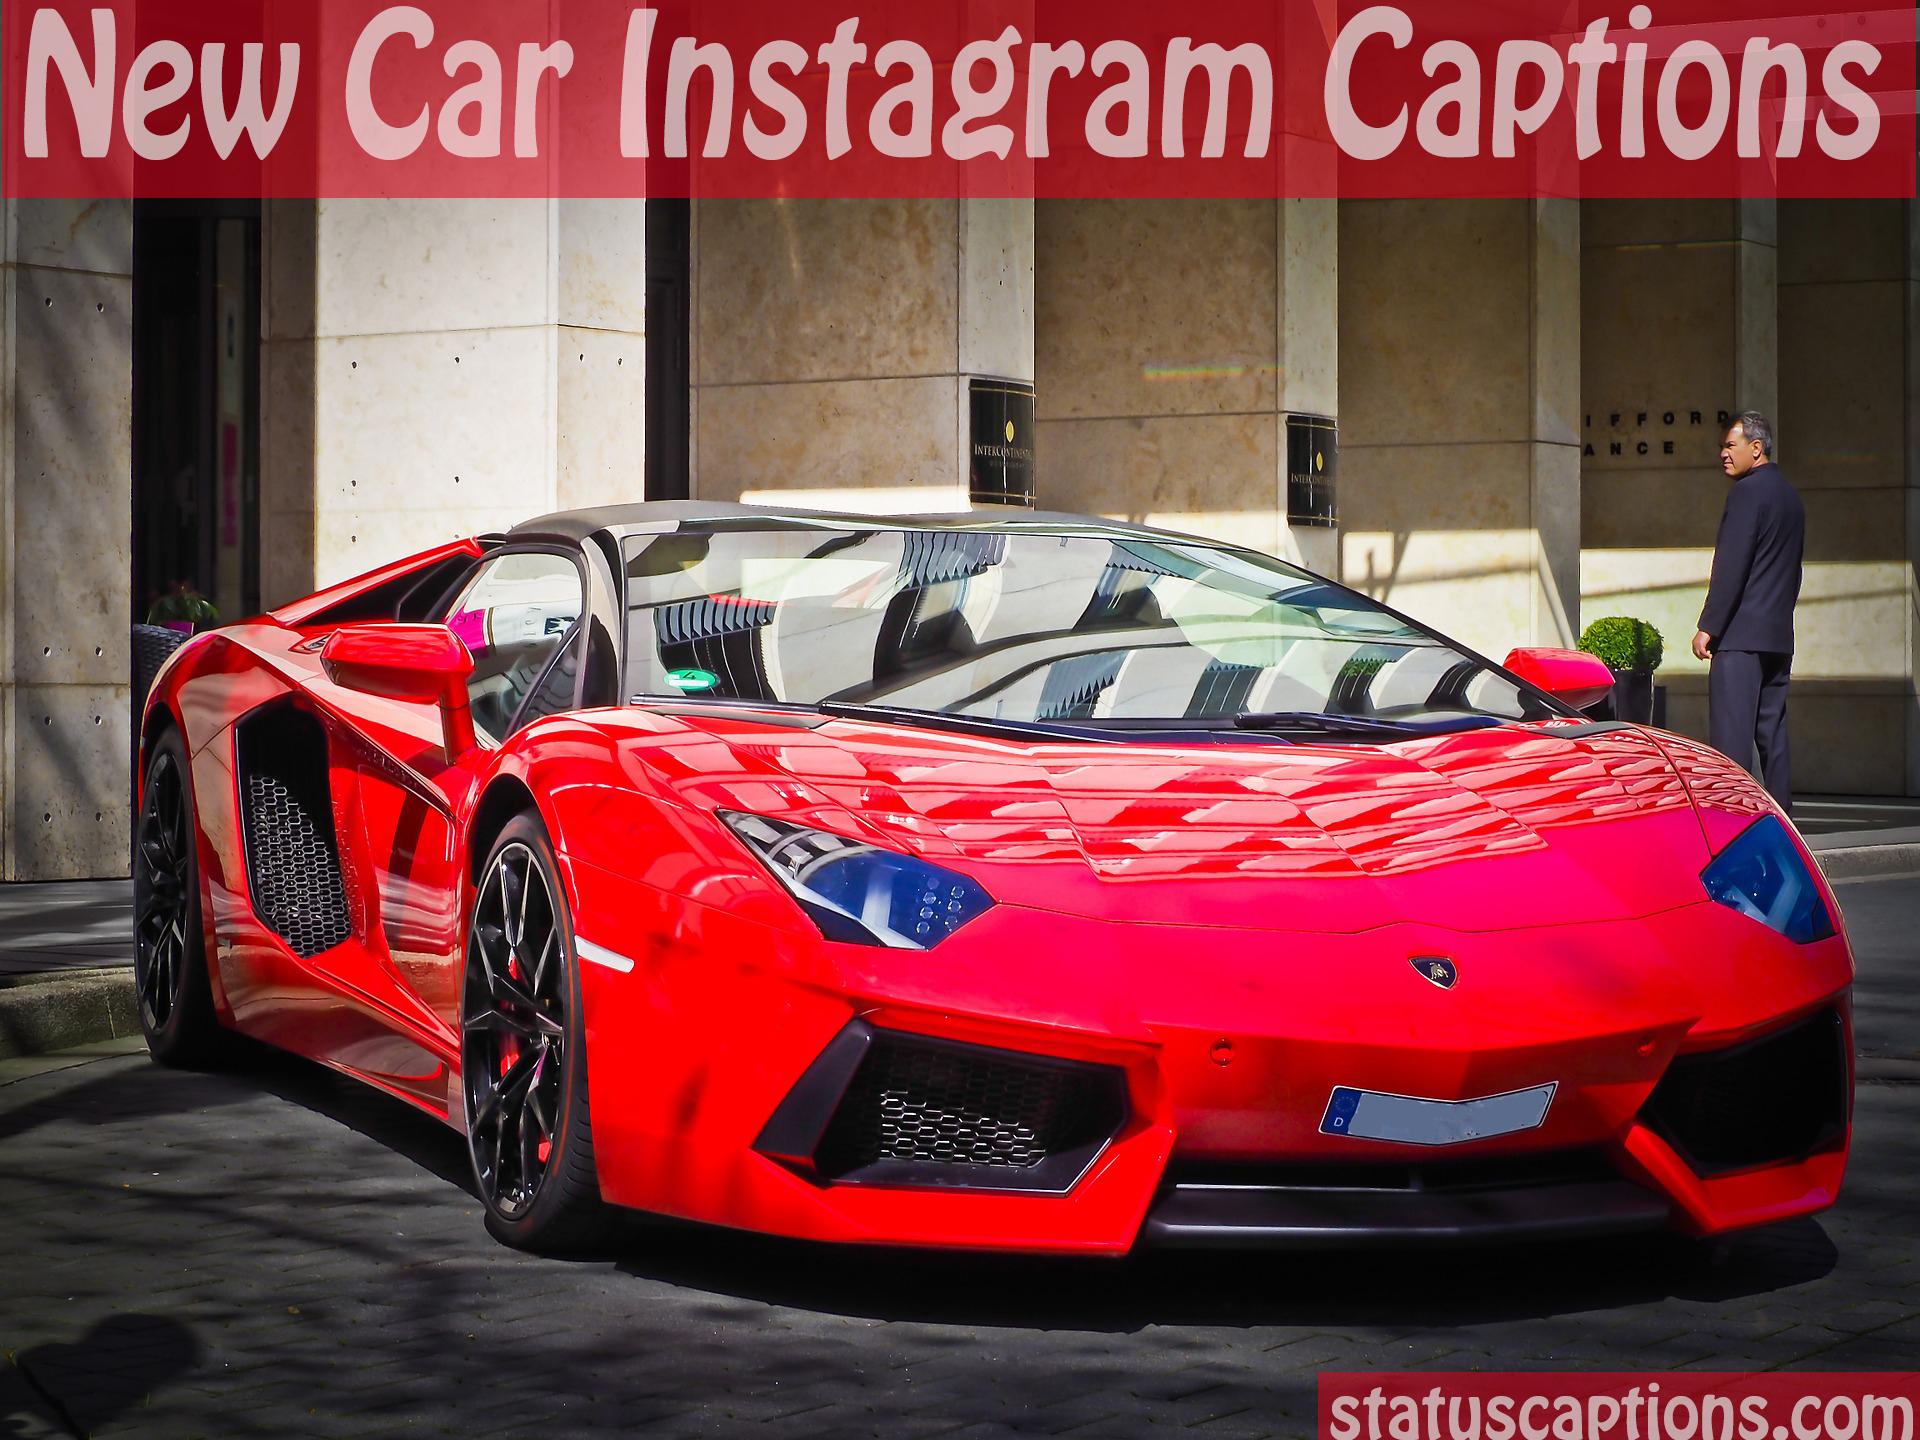 New Car Instagram captions